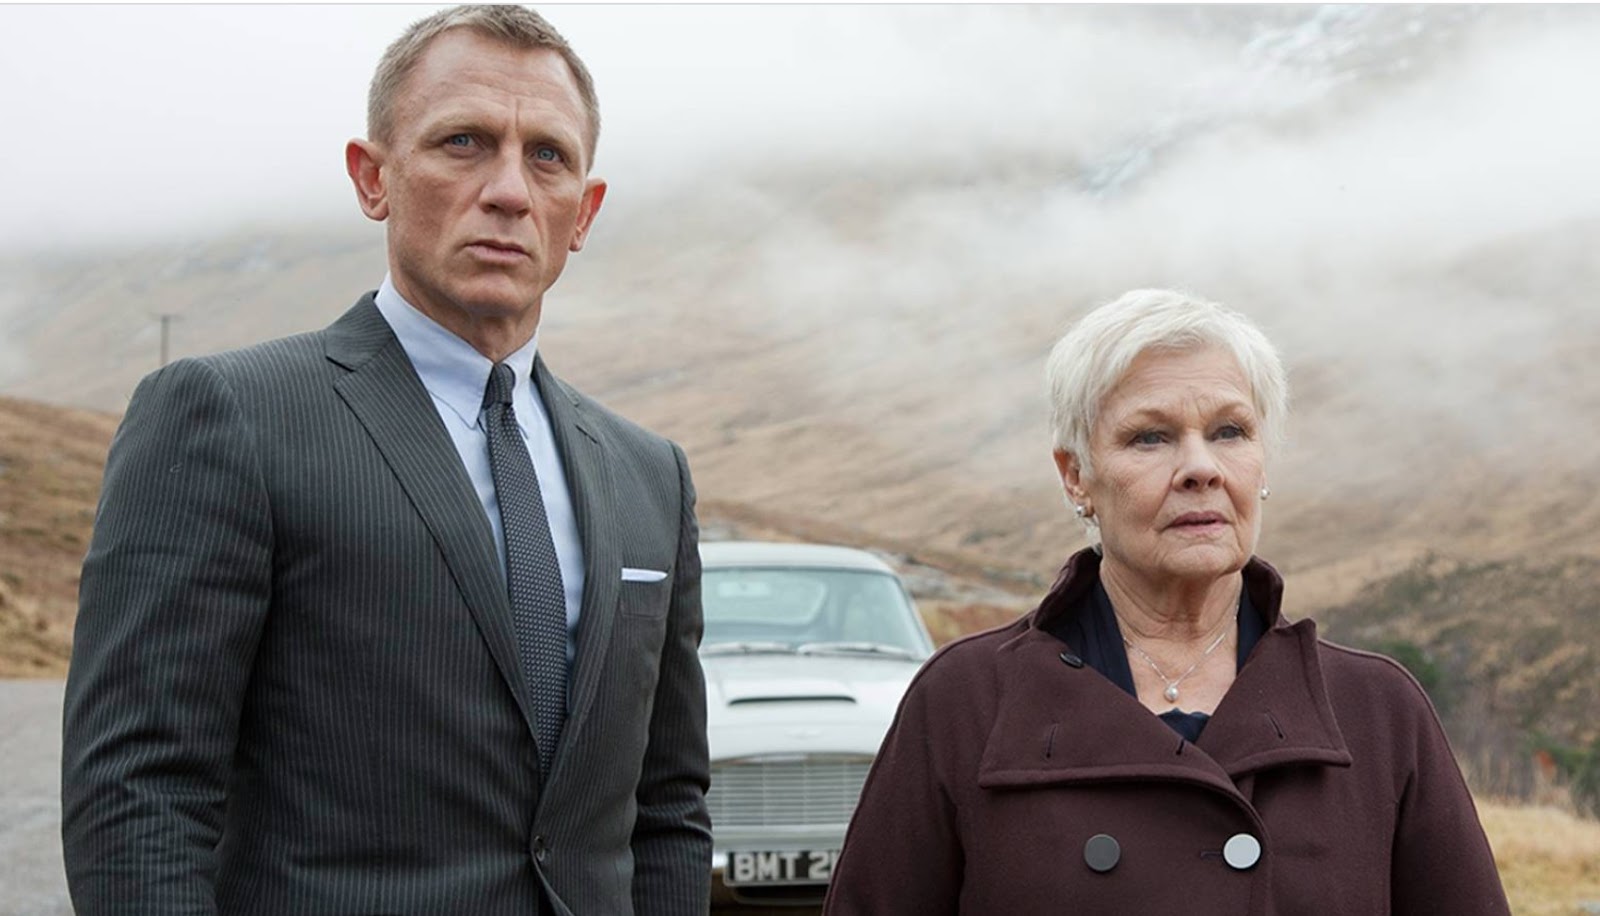 Daniel Craig and Judi Dench as 007 and M